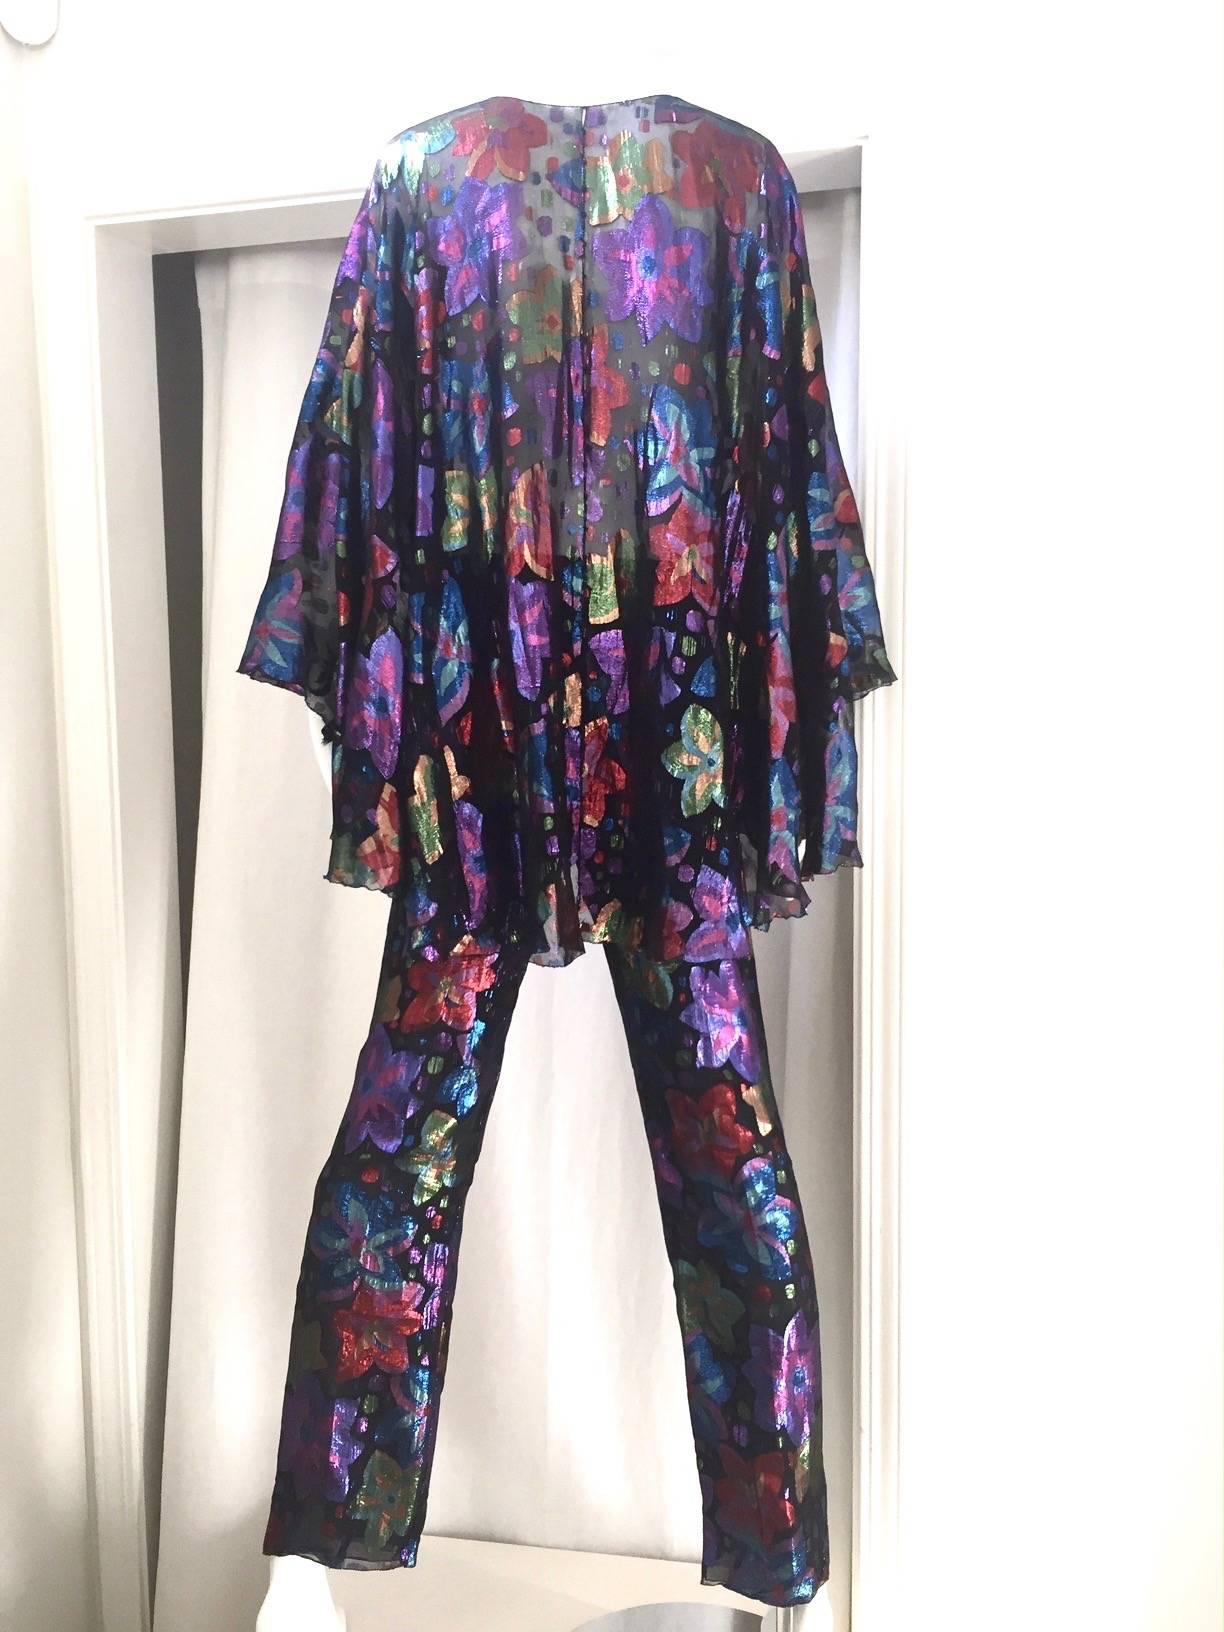 1970s Silk metallic print blouse and pants ensemble. batwing sleeve. elastic waist.
size: top fit size 2/4/6/8
pants : fit size 6